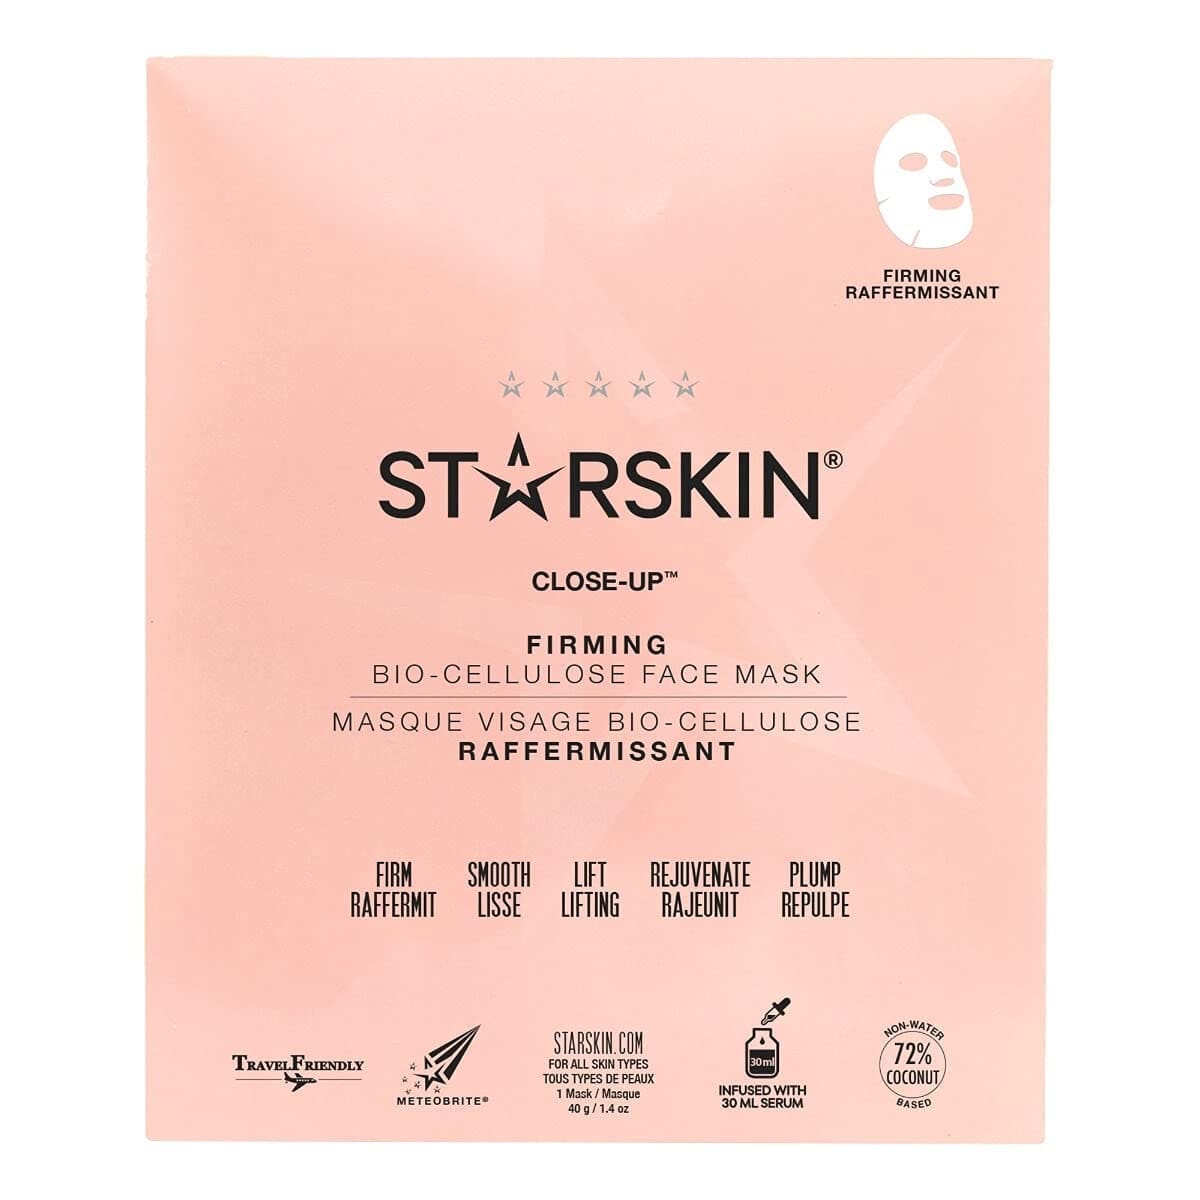 Starskin close-up firming sheet mask